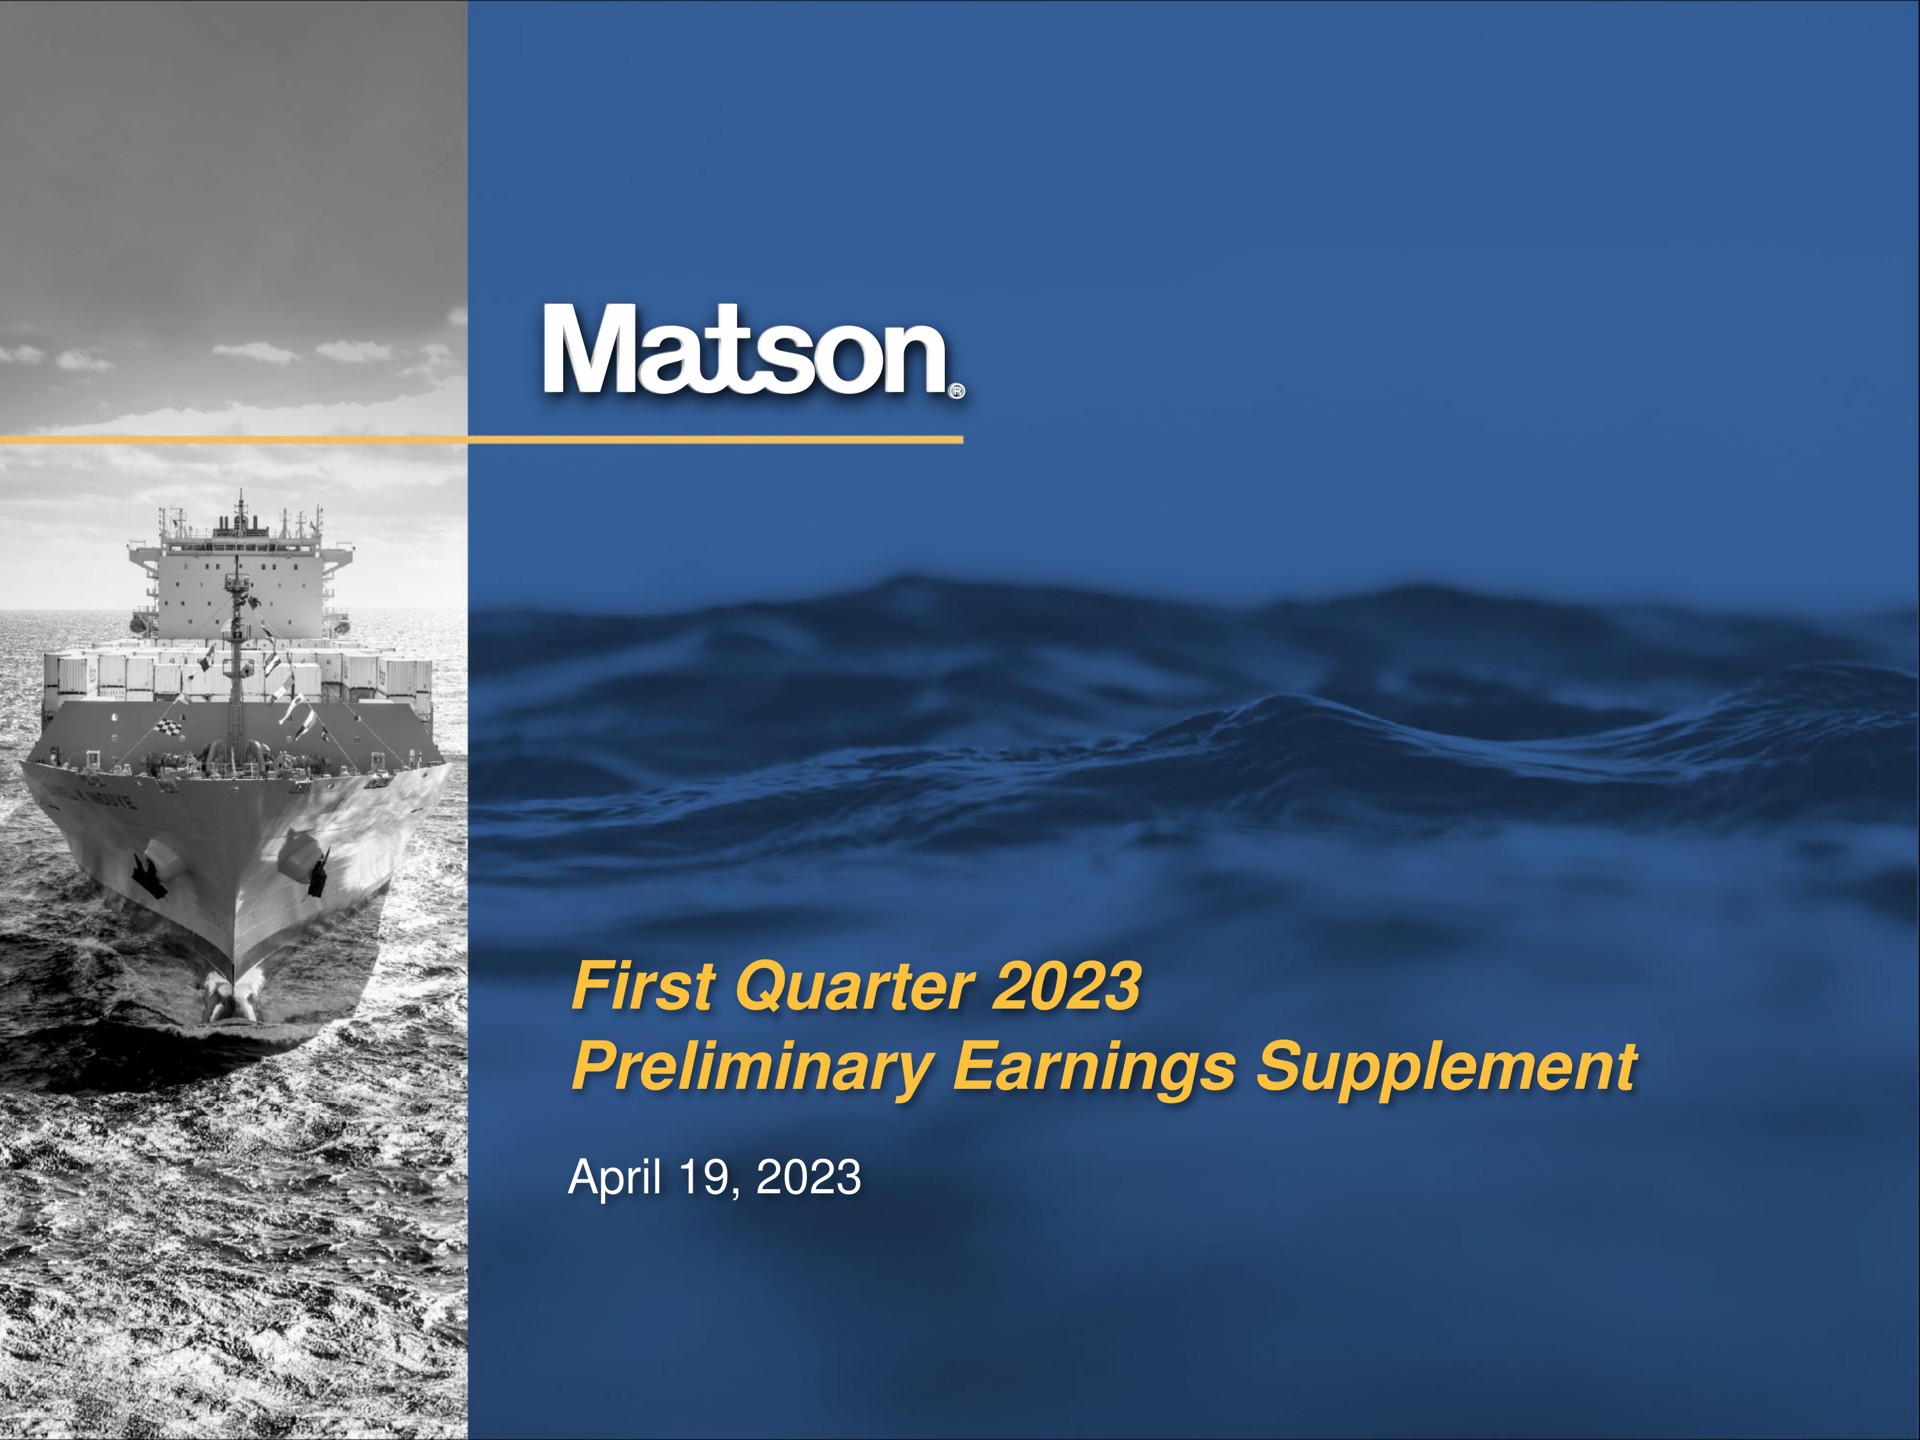 first quarter preliminary earnings supplement | Matson